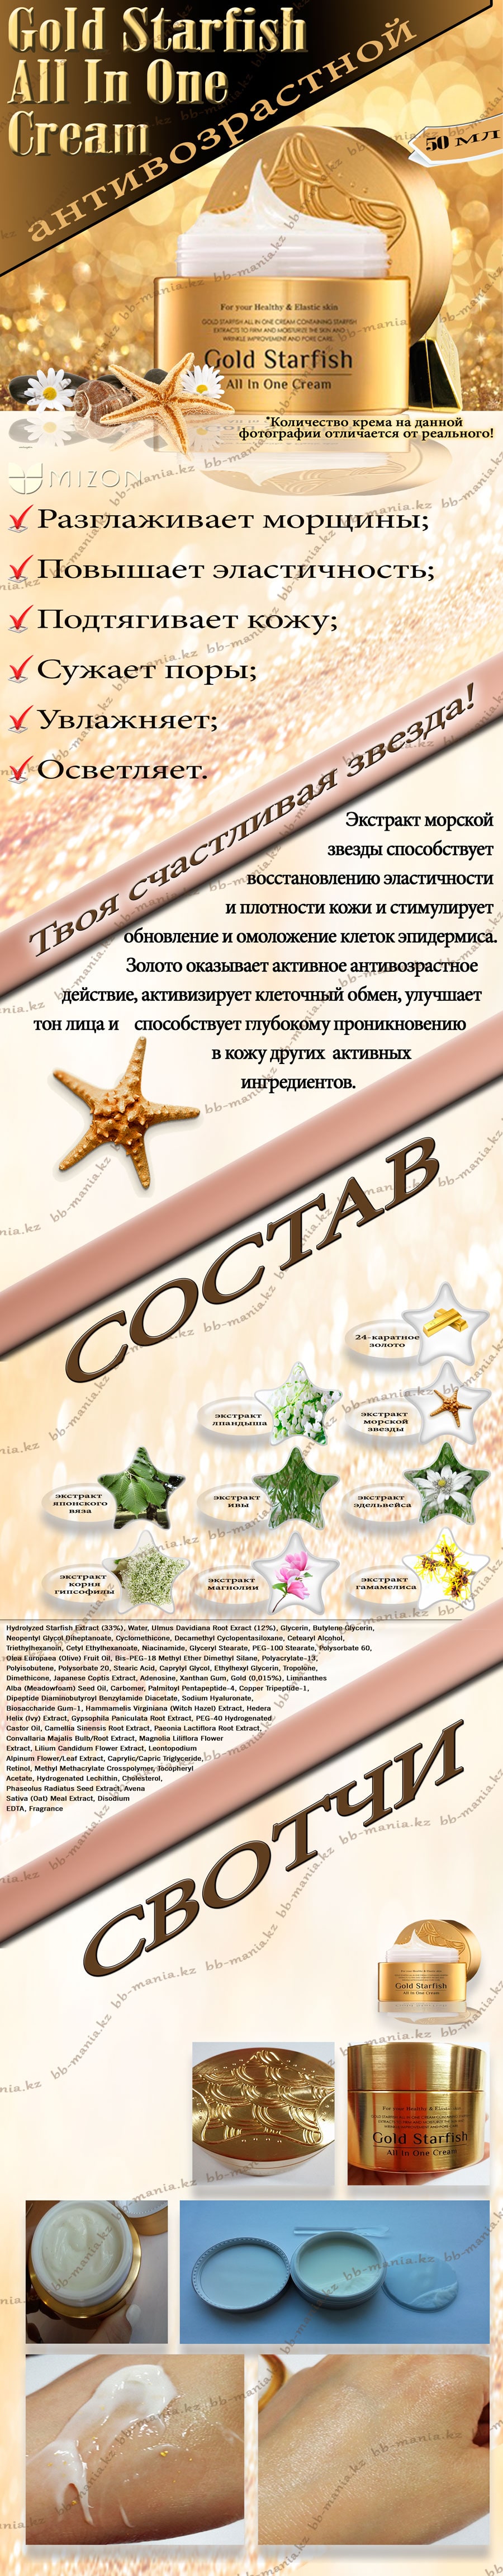 Gold-Starfish-All-In-One-Cream-min